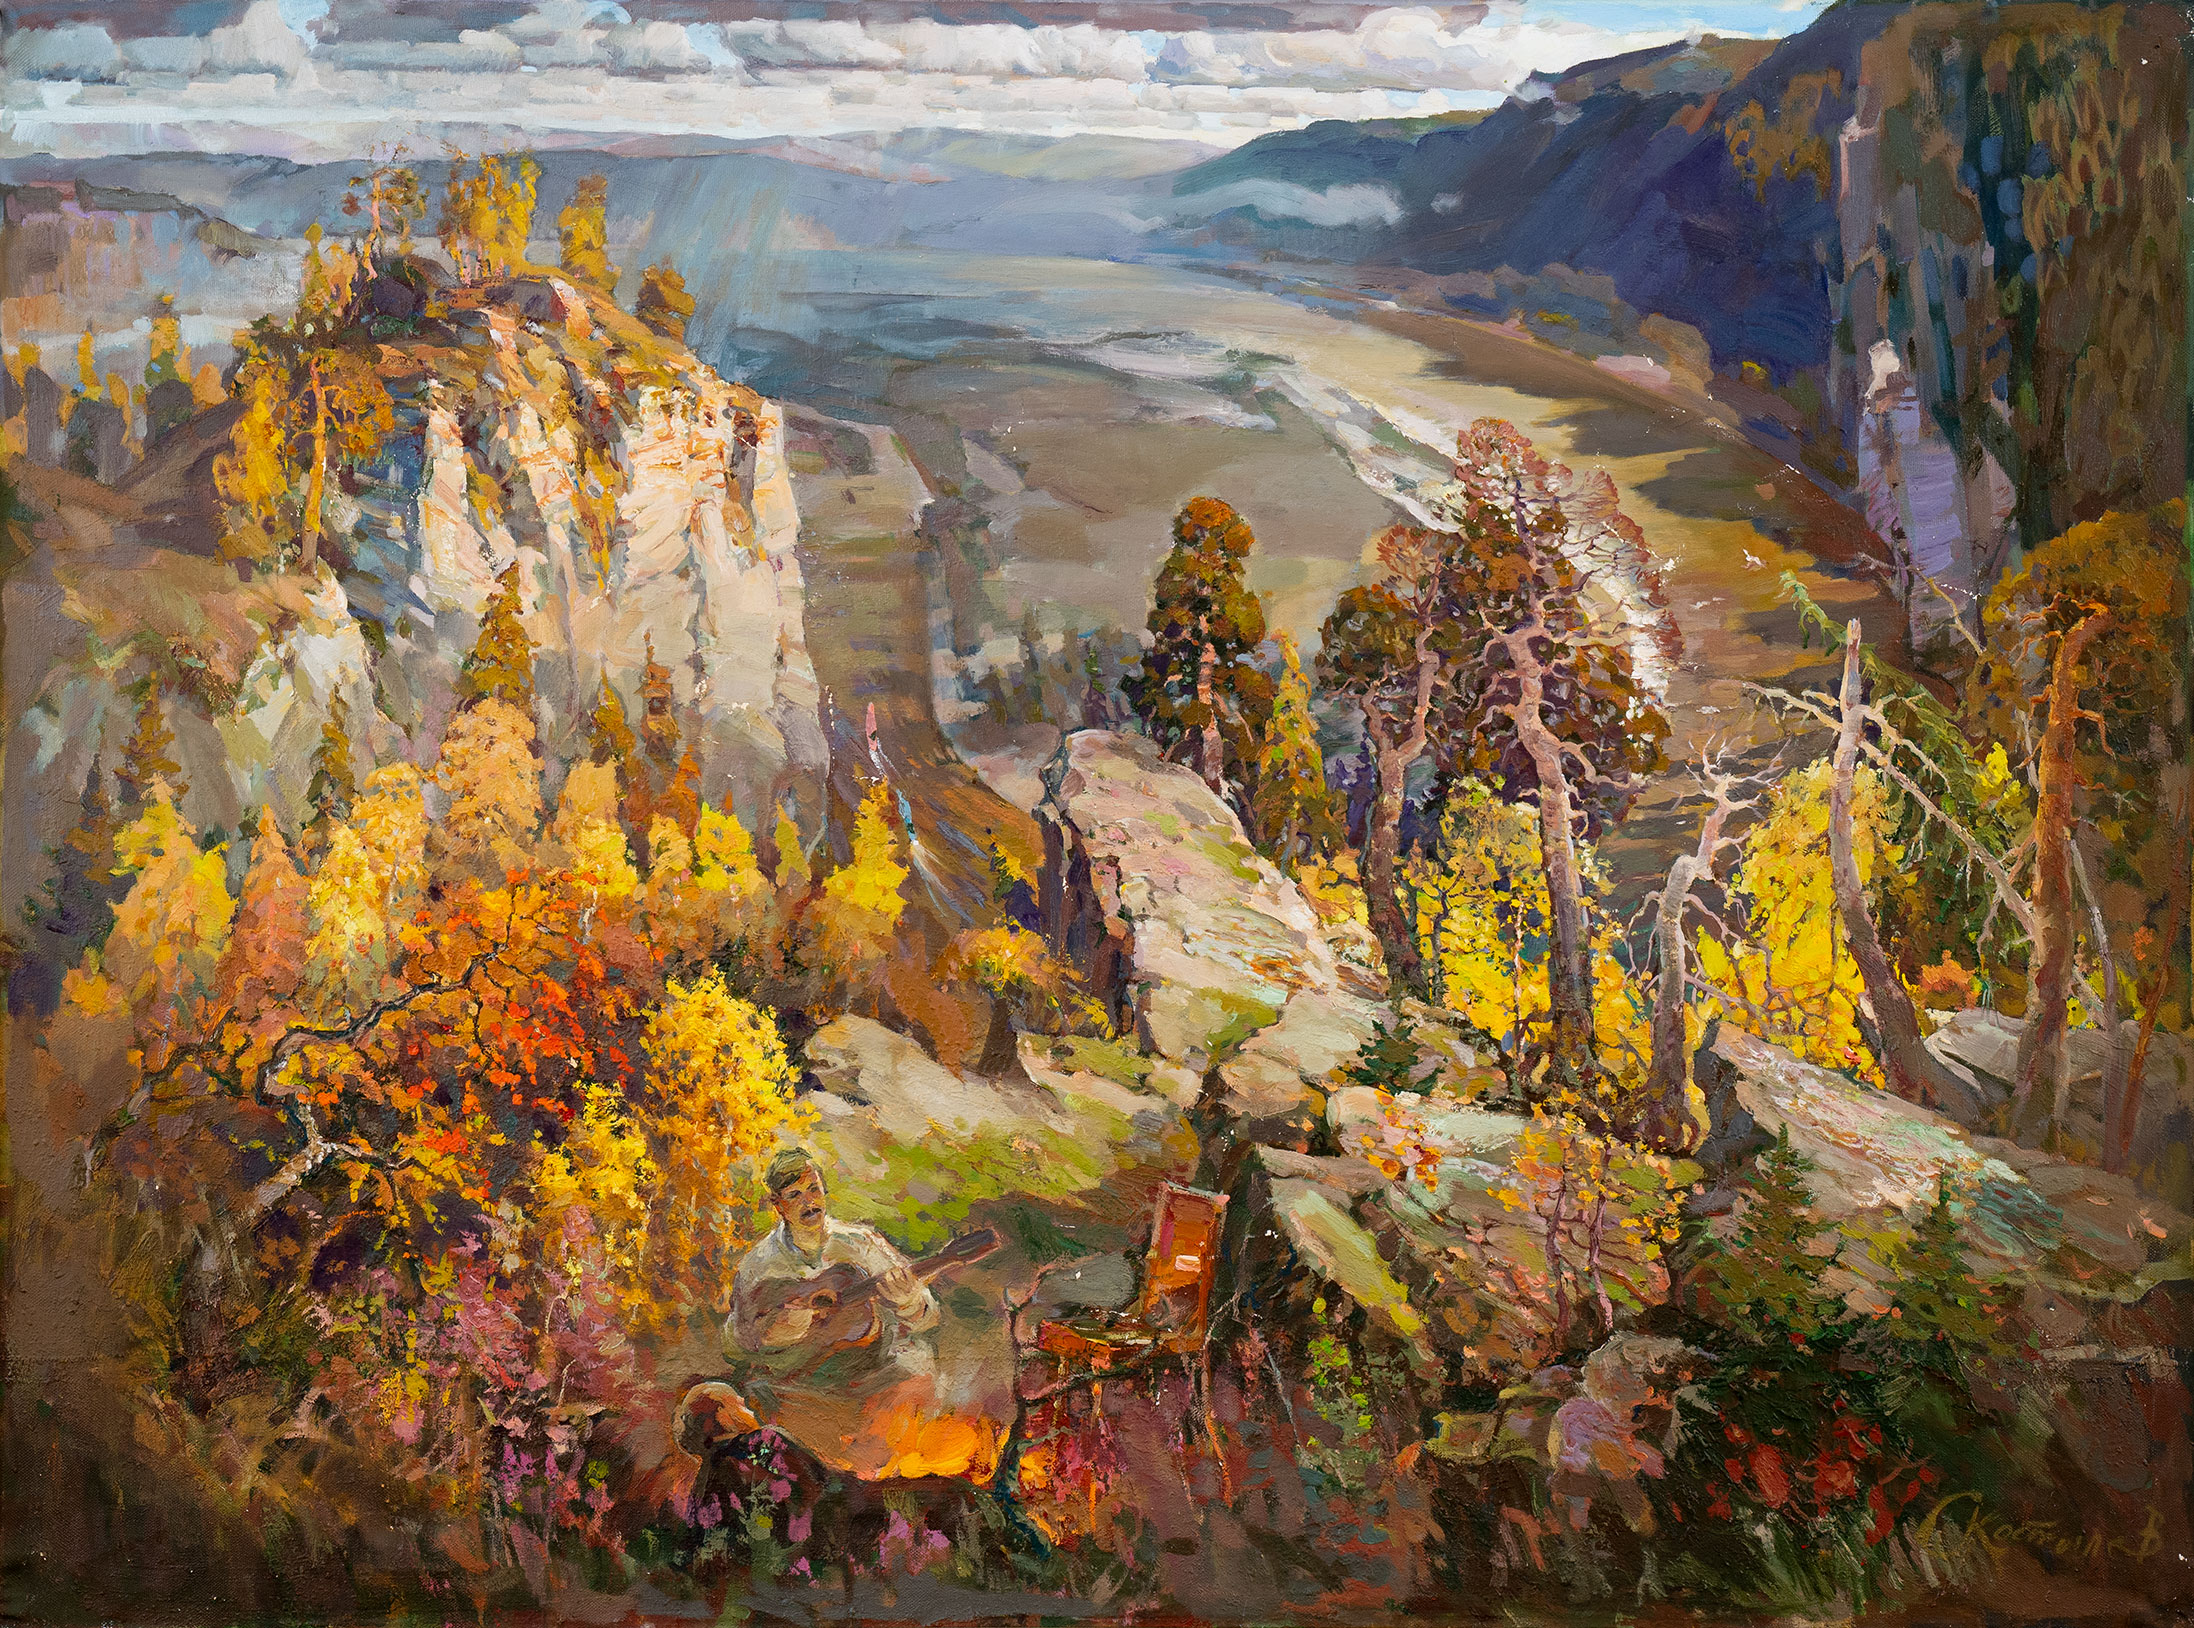 On Halt - 1, Sergey Kostylev, Buy the painting Oil